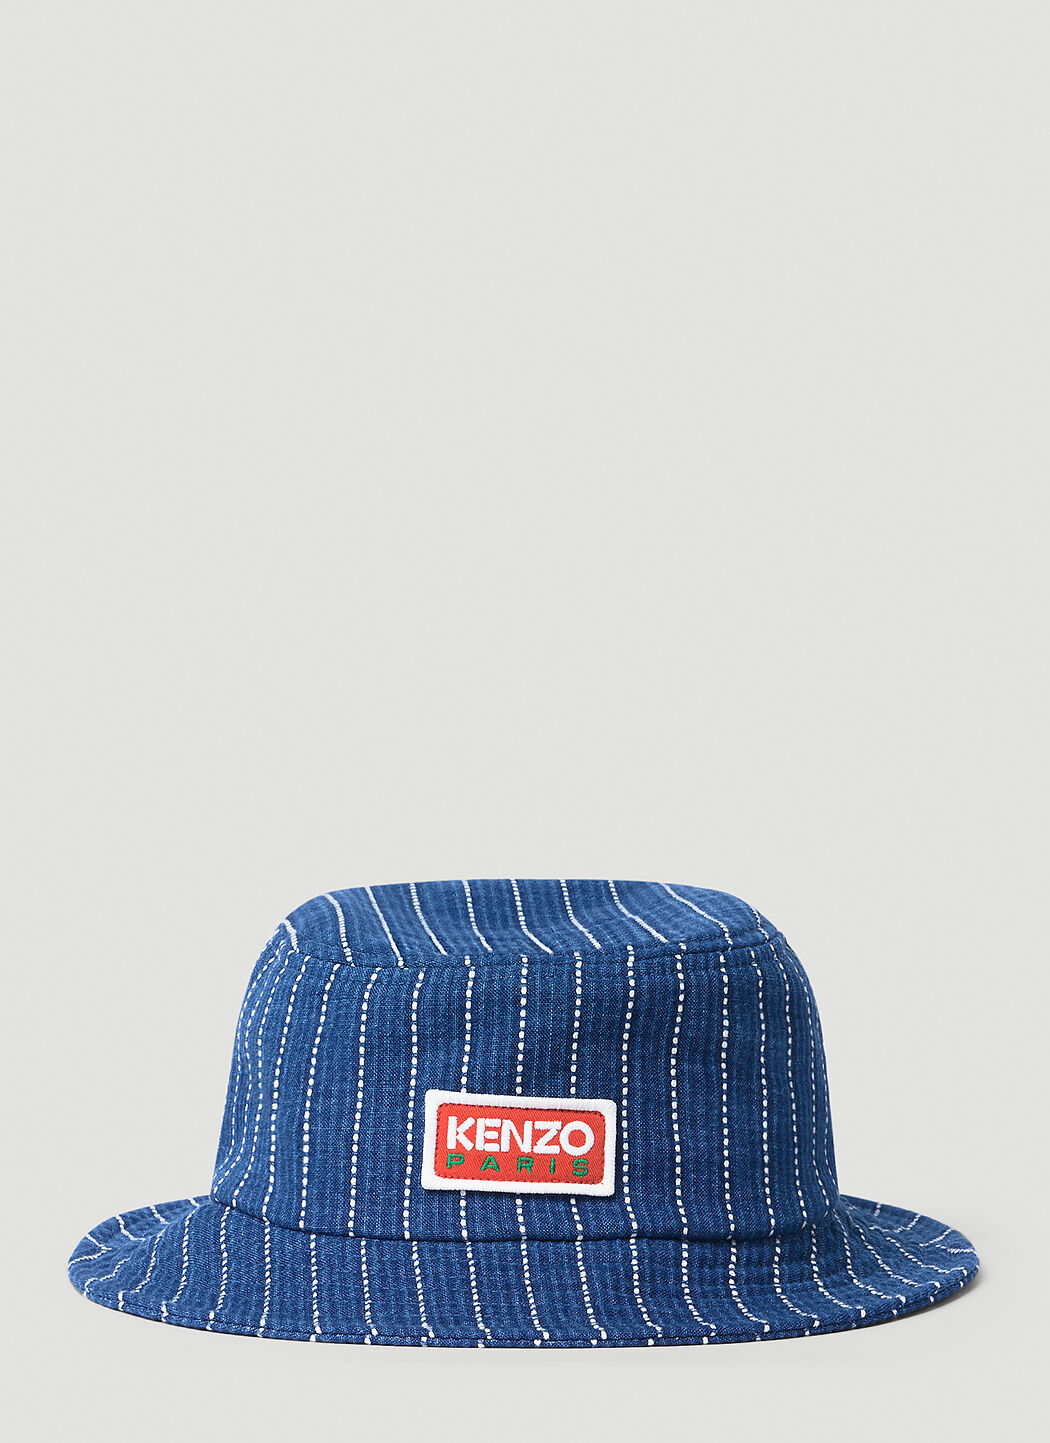 Kenzo x Levi's Logo Stamp Denim Stripe Bucket Hat Red klv0156003